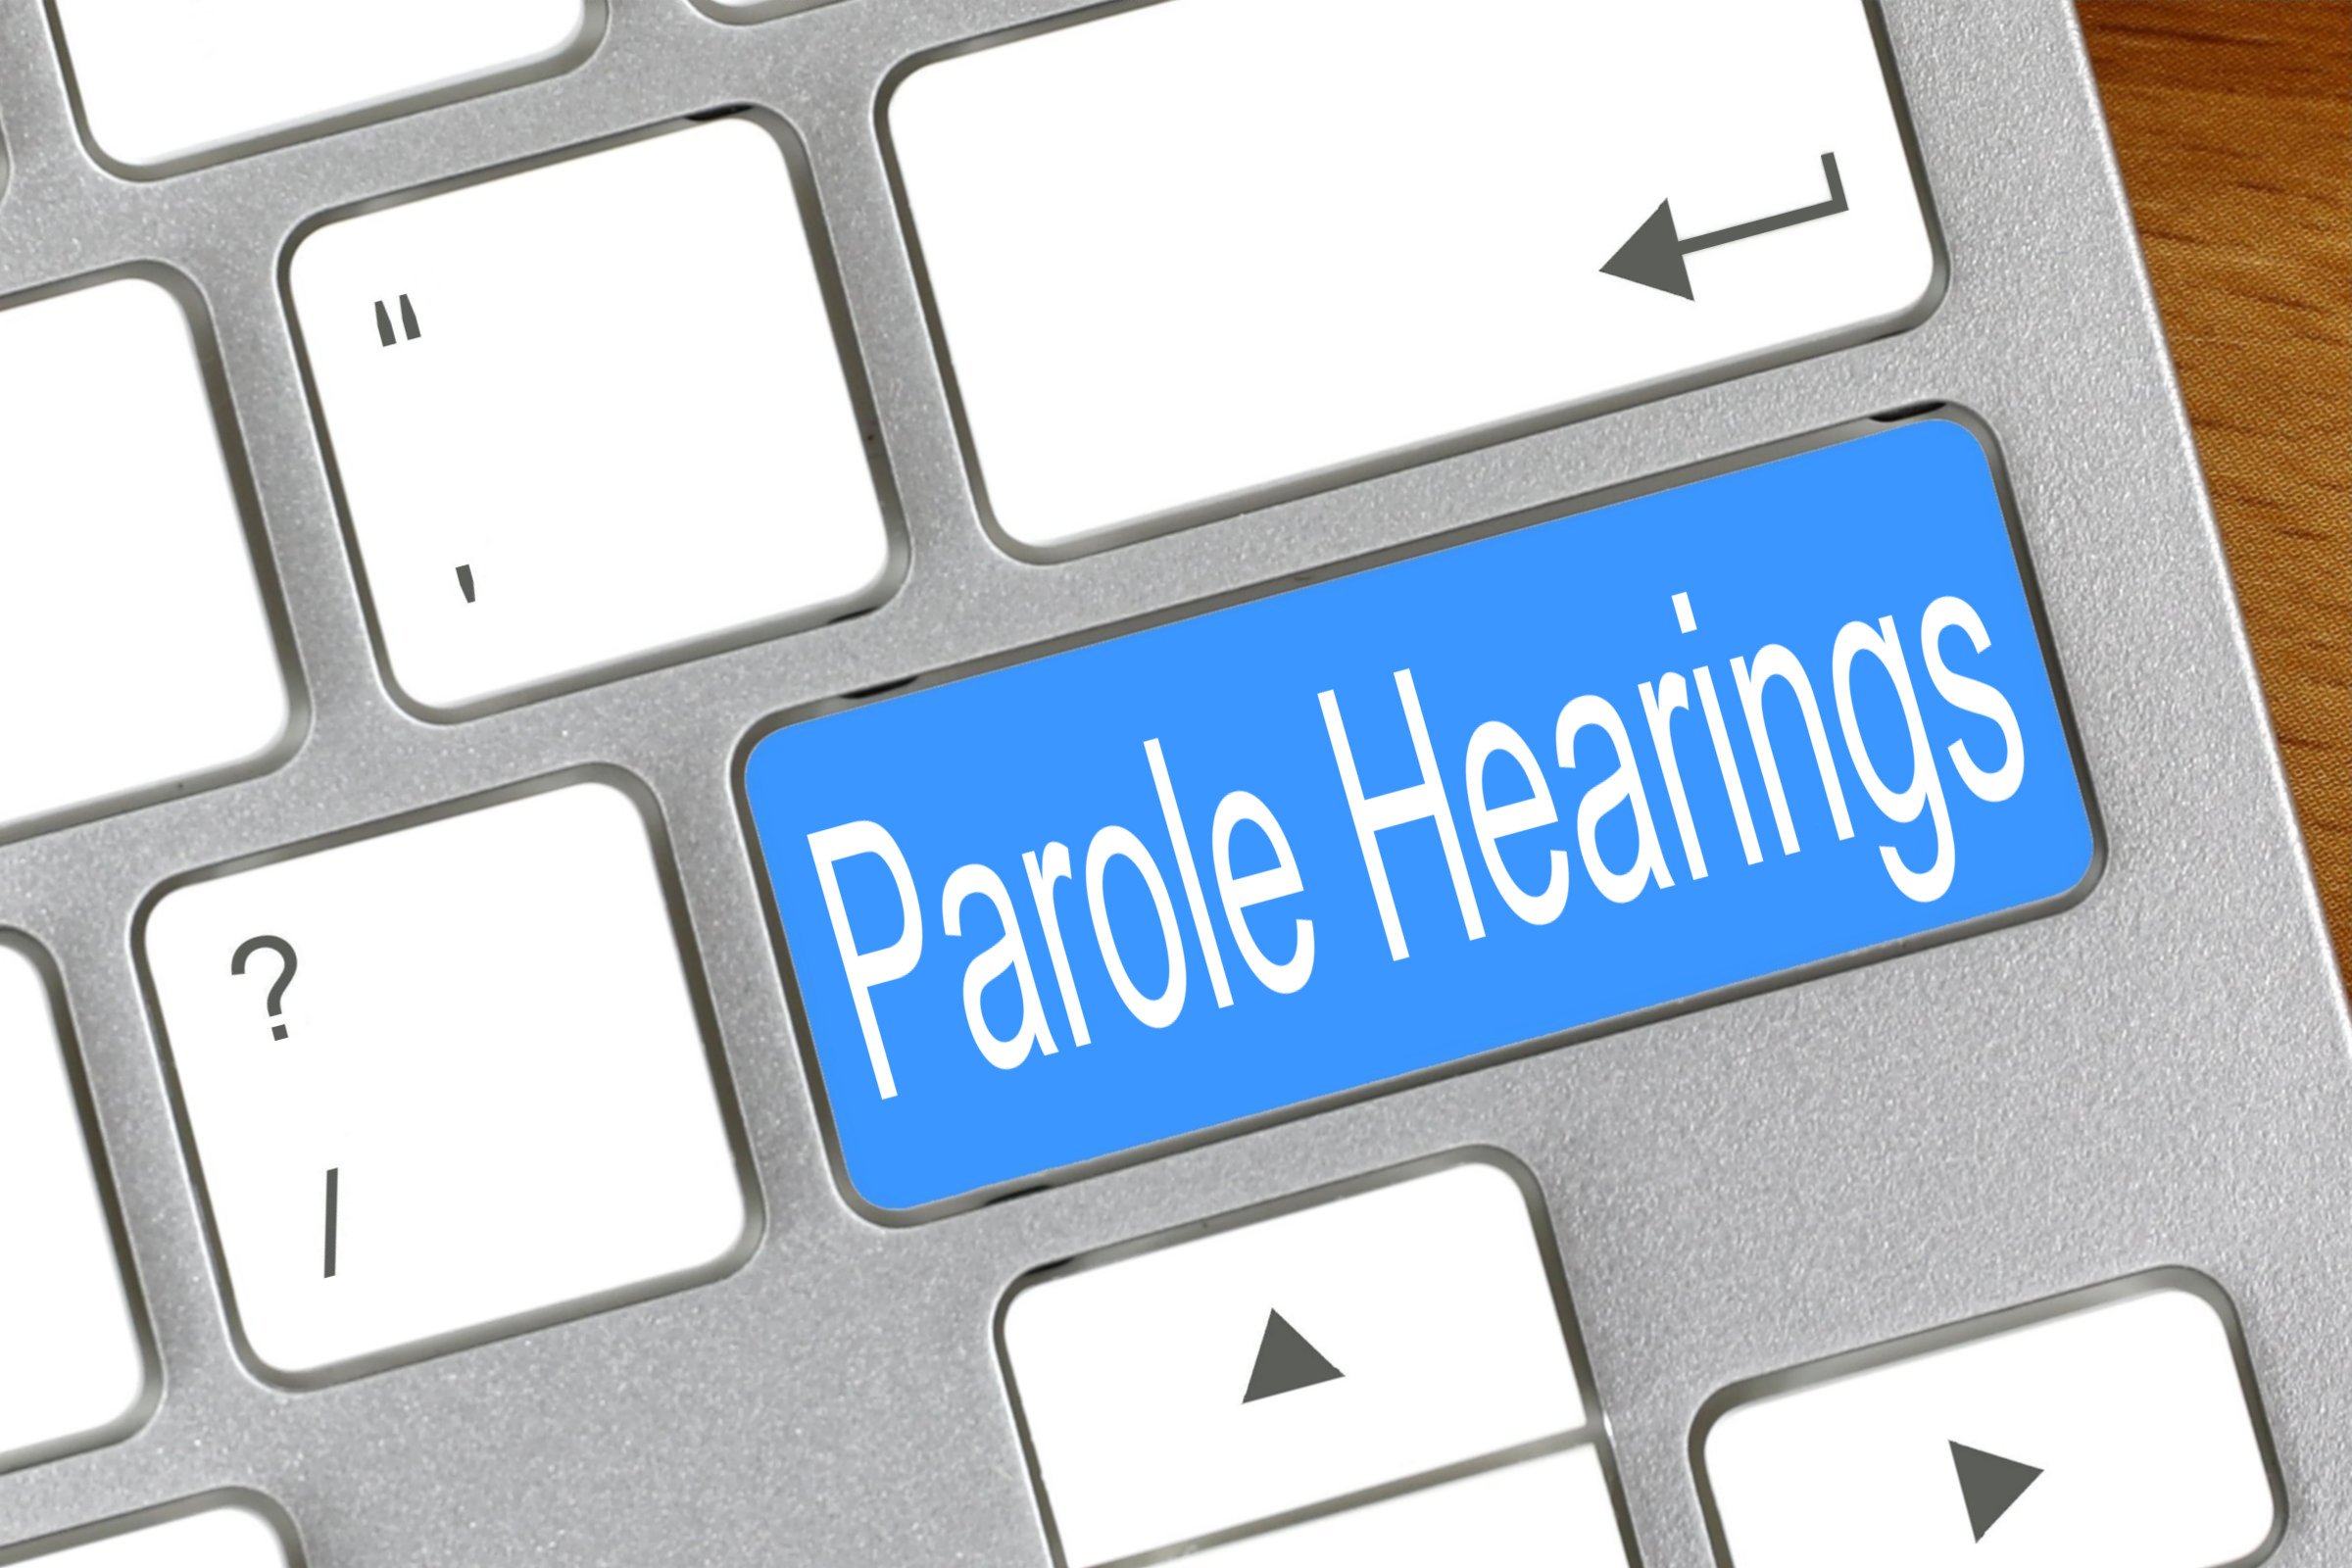 parole hearings